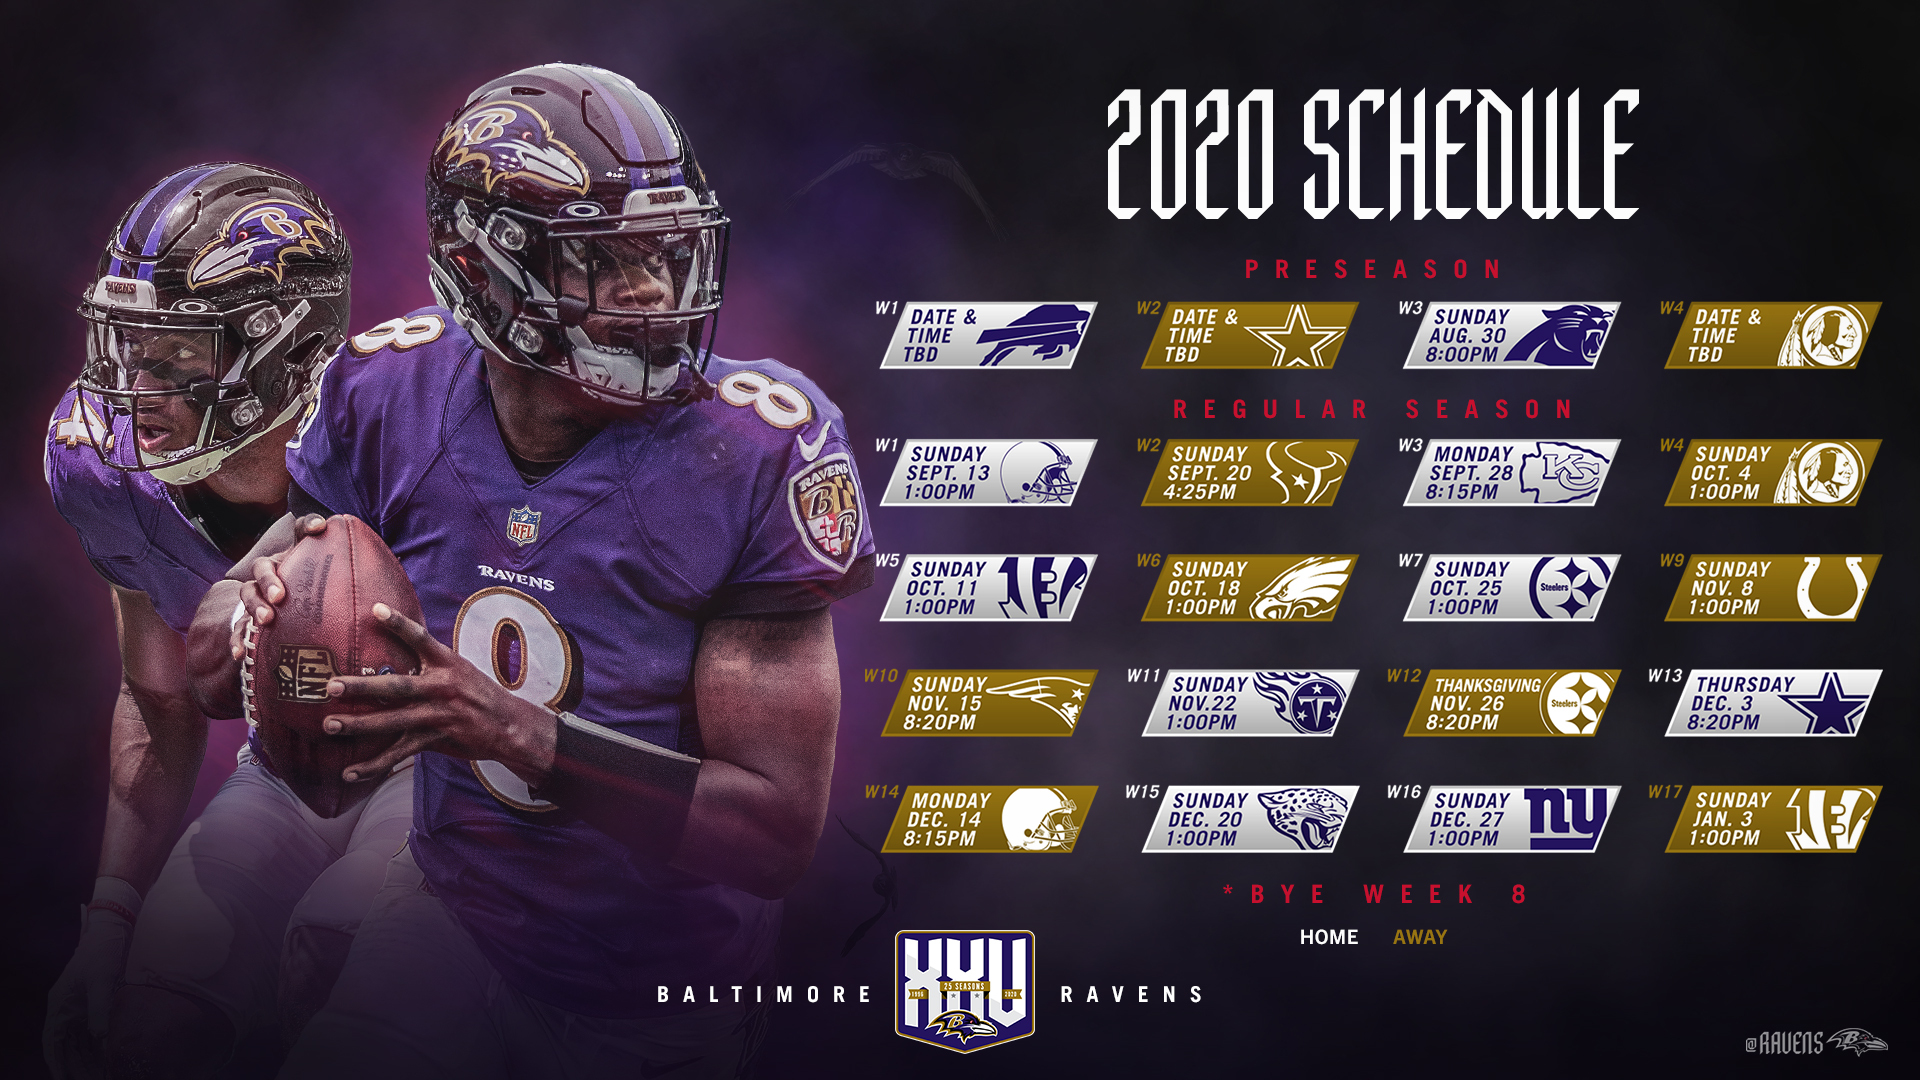 Ravens 2020 schedule released